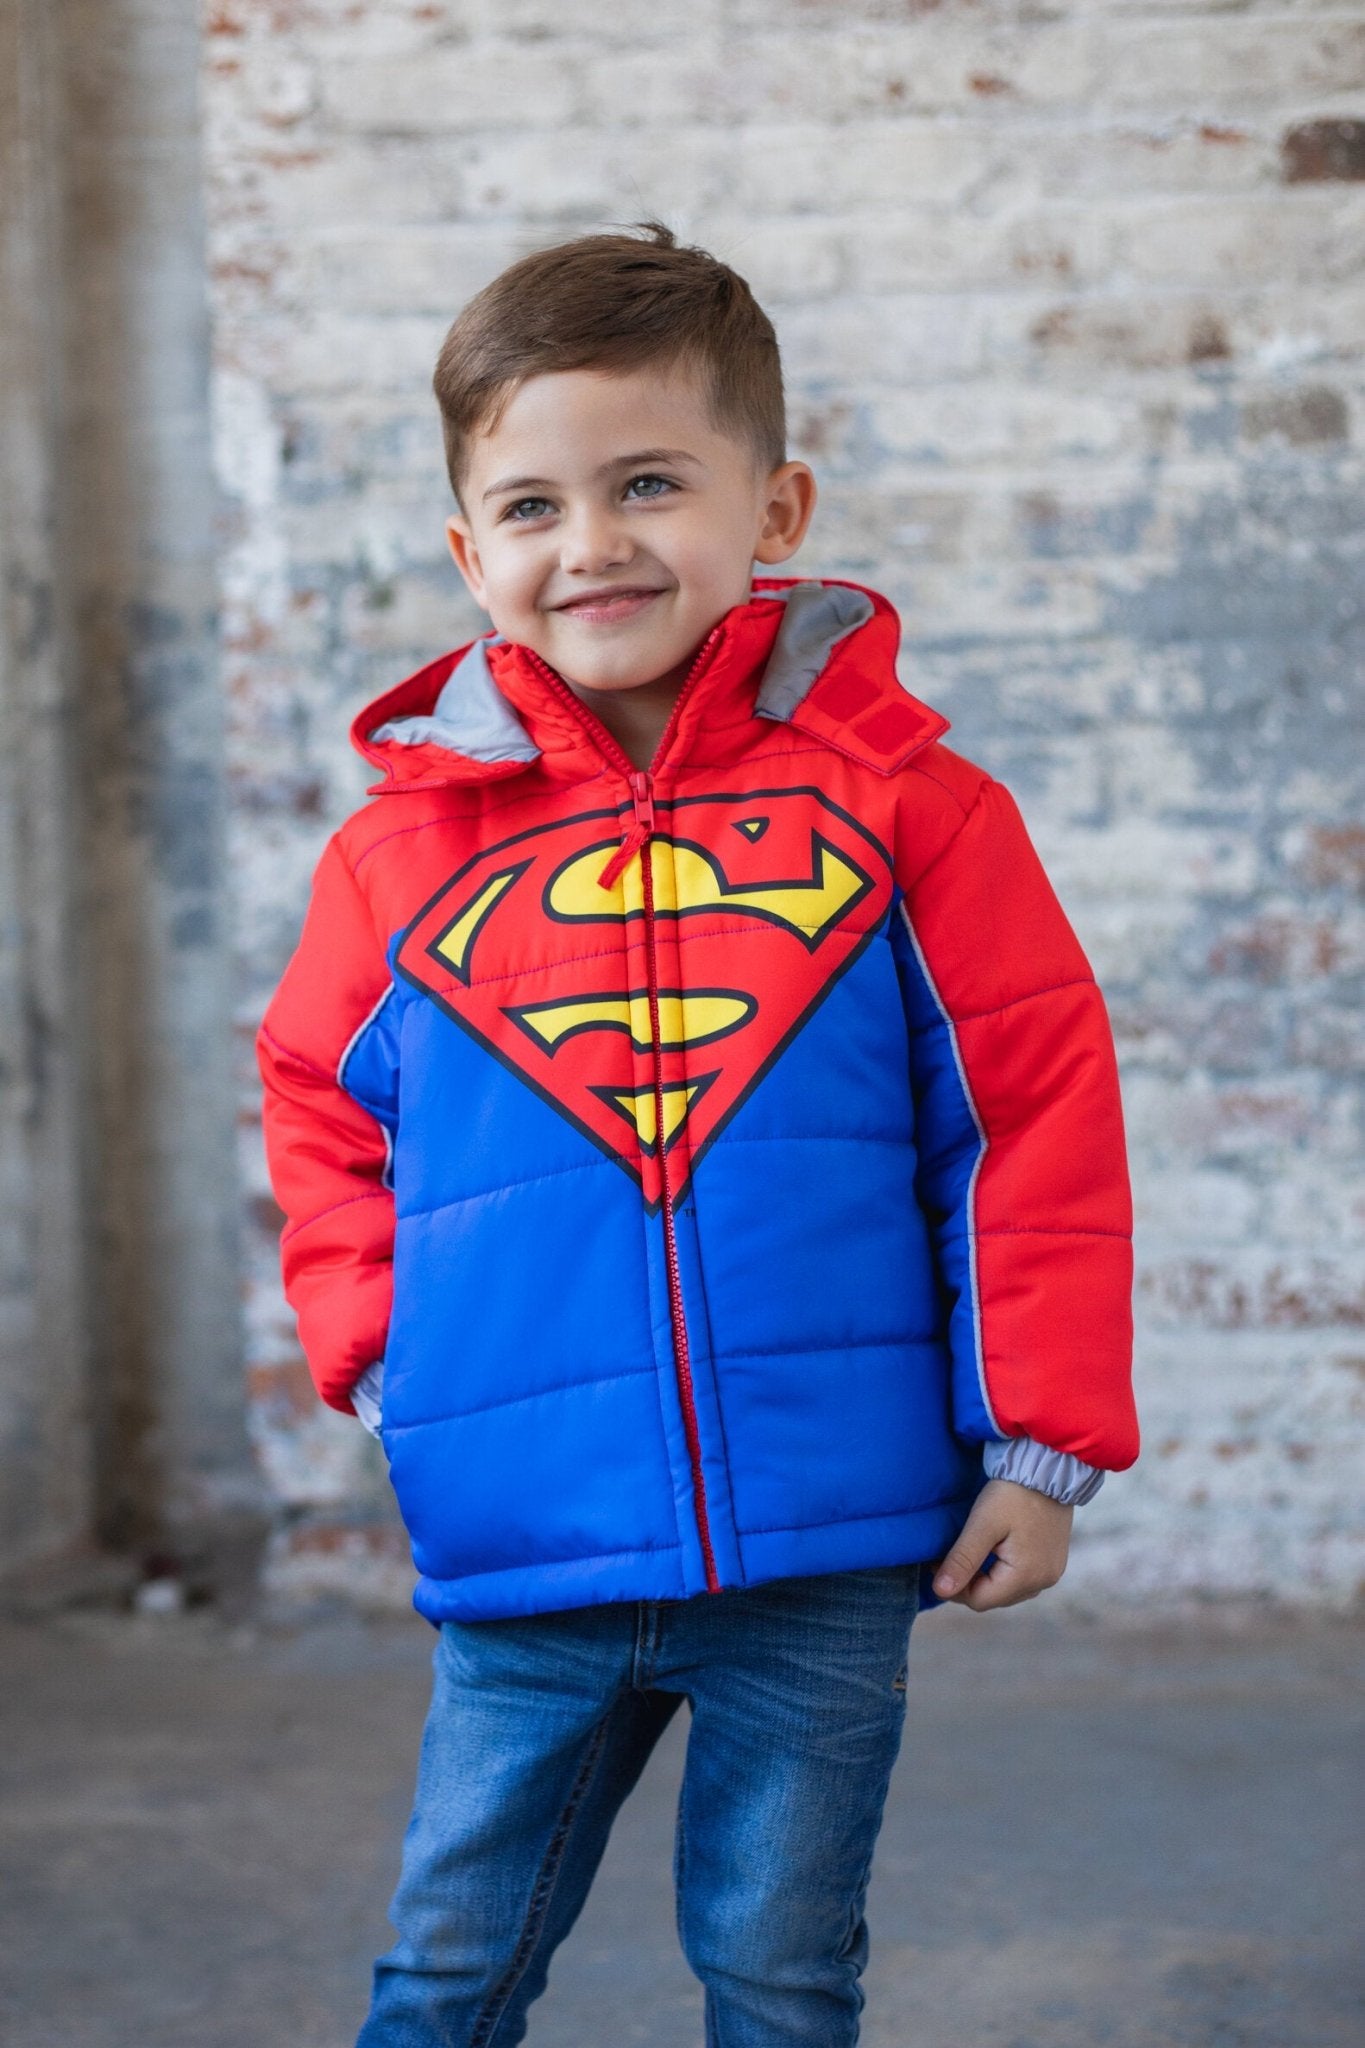 DC Comics Justice League Superman Zip Up Winter Coat Puffer Jacket - imagikids